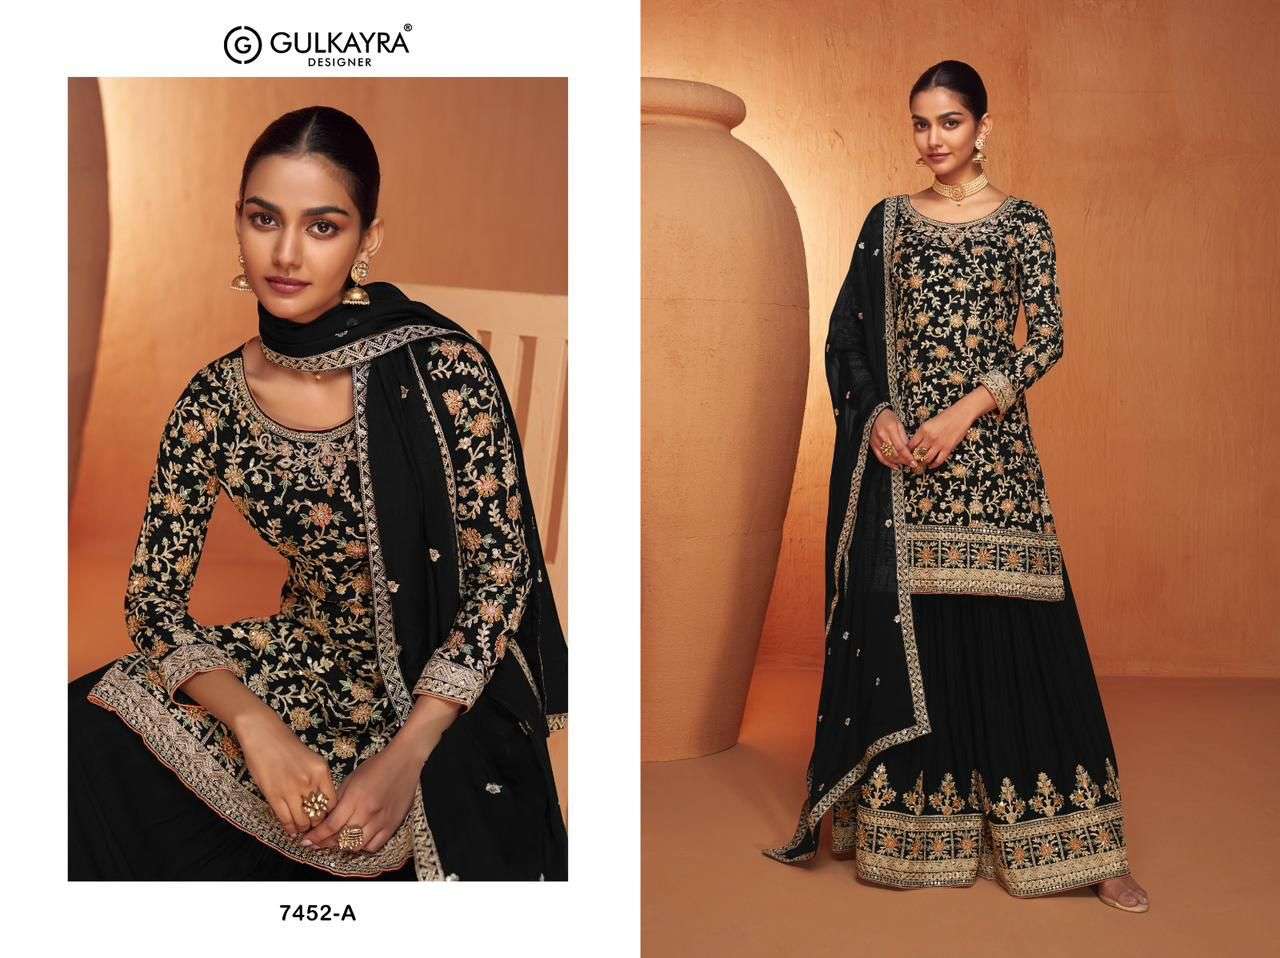 Gulkayra Jhanvi Real Chinon Designer Salwar Suits Wholesale catalog